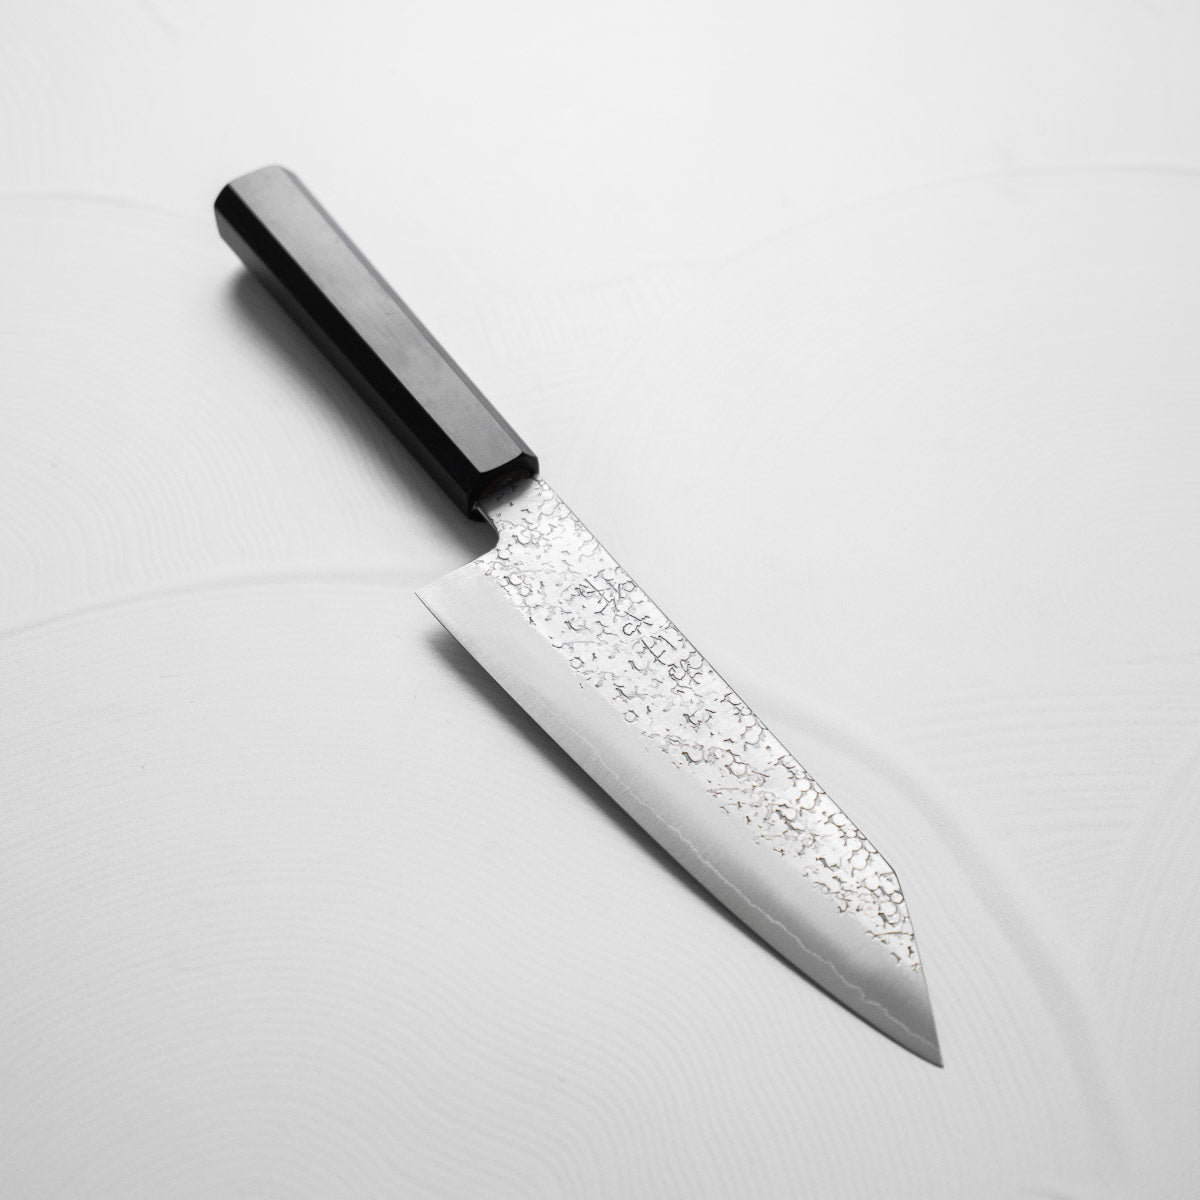 Exploring the Art of Japanese Knife Making